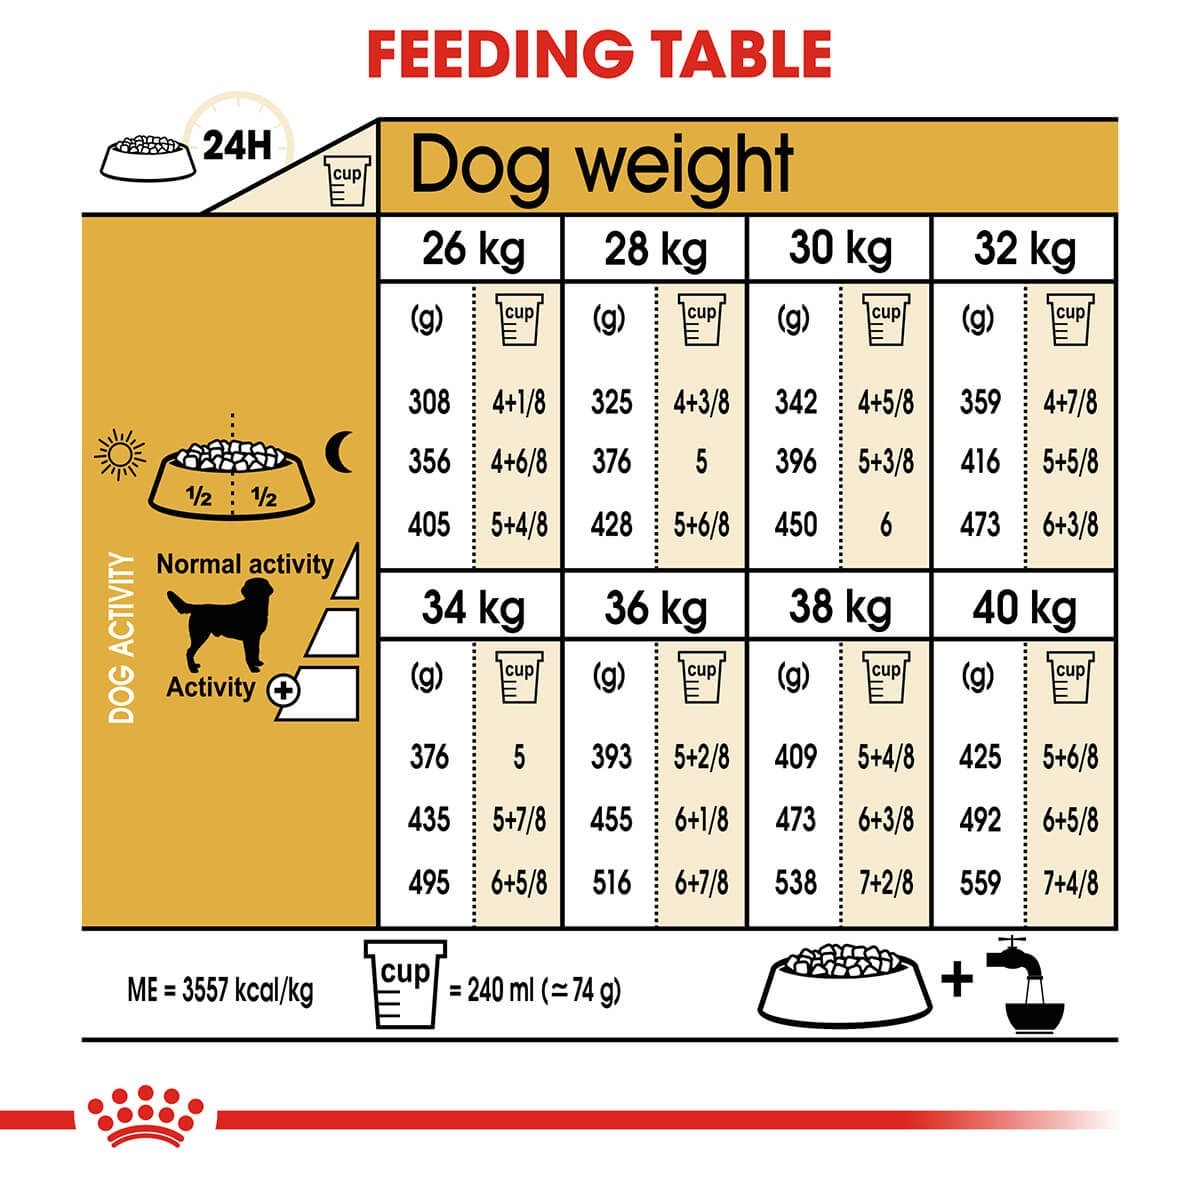 Royal Canin Labrador Retriever Adult Chicken Dry Dog Food (122725000078) [default_color]